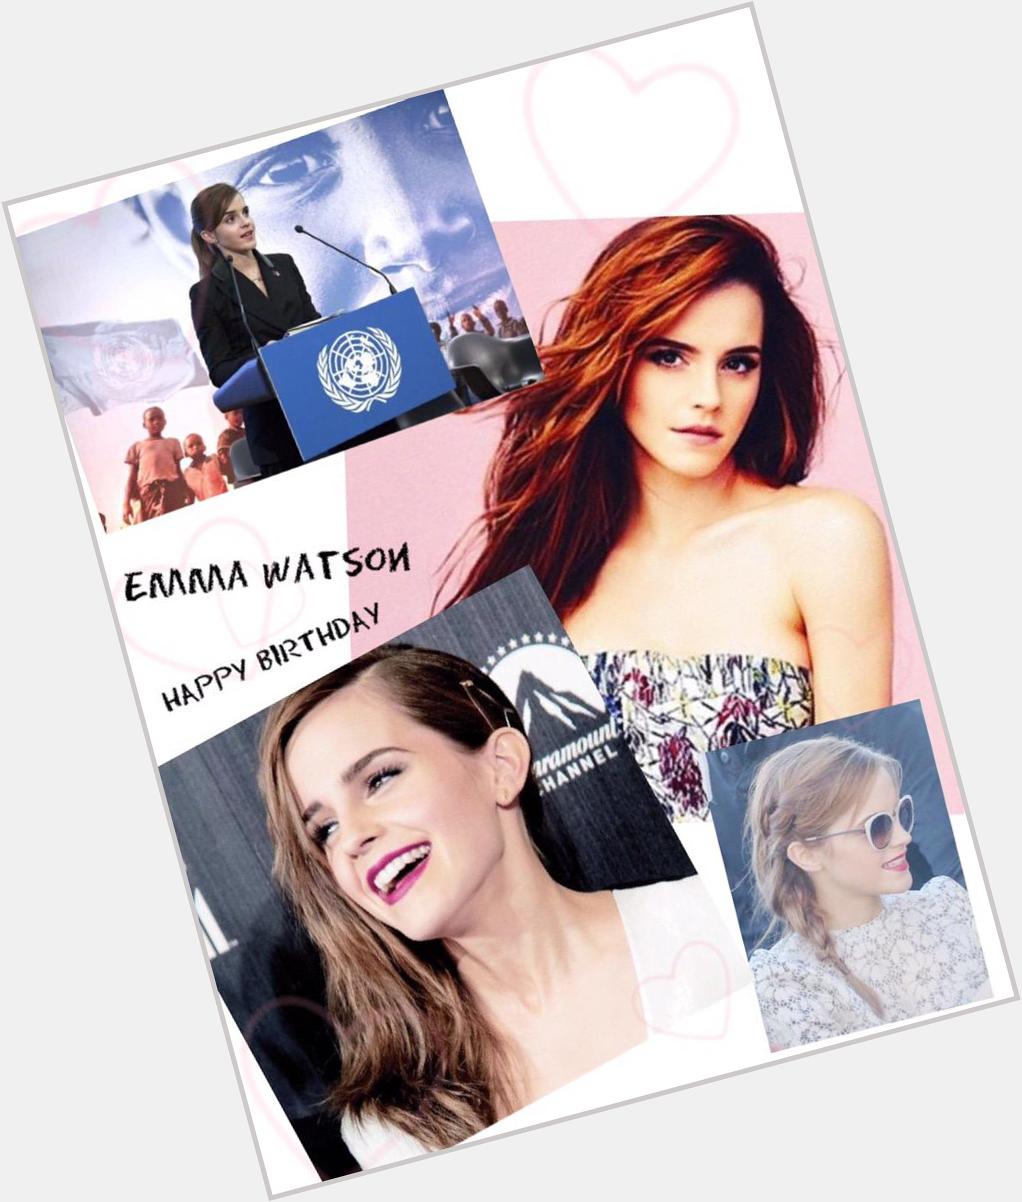 HAPPY BIRTHDAY Emma Watson 